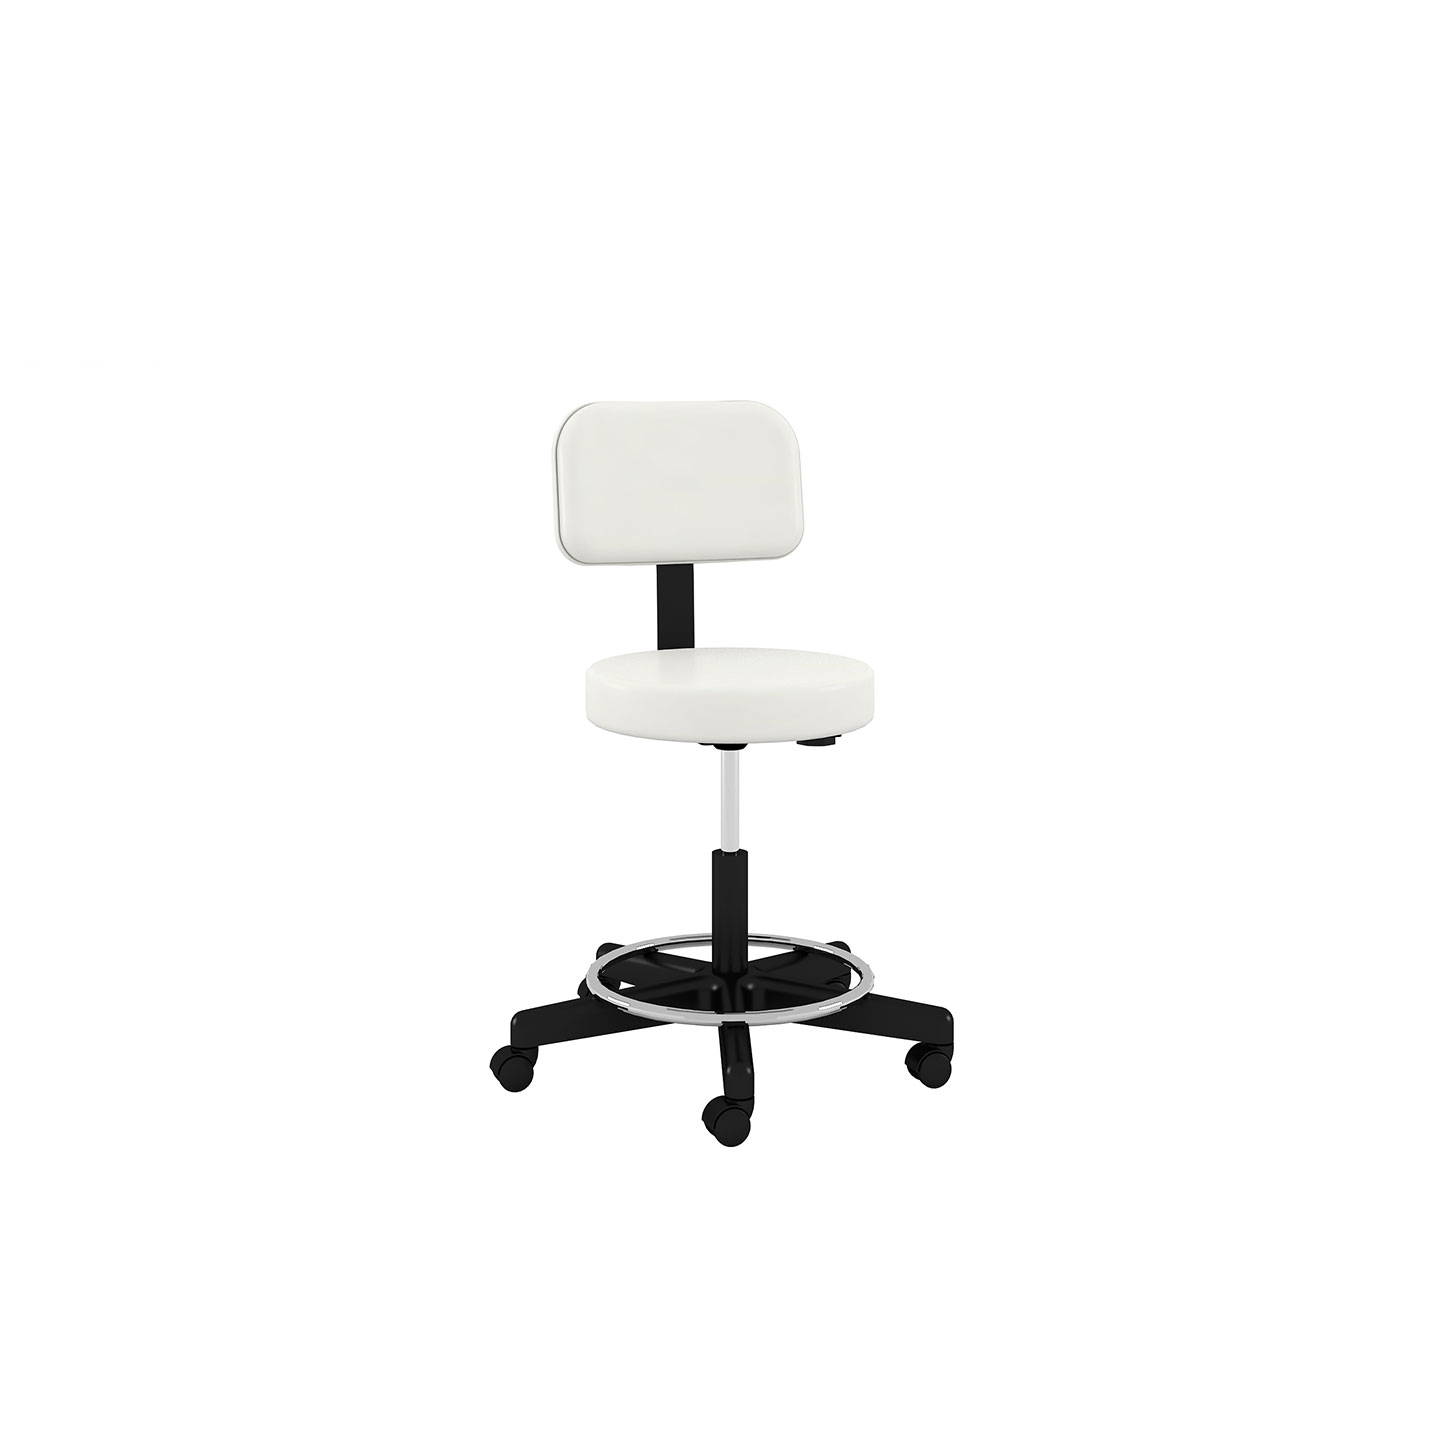 Haworth Exam stool in white upholstery, back rest, swivel base and wheels